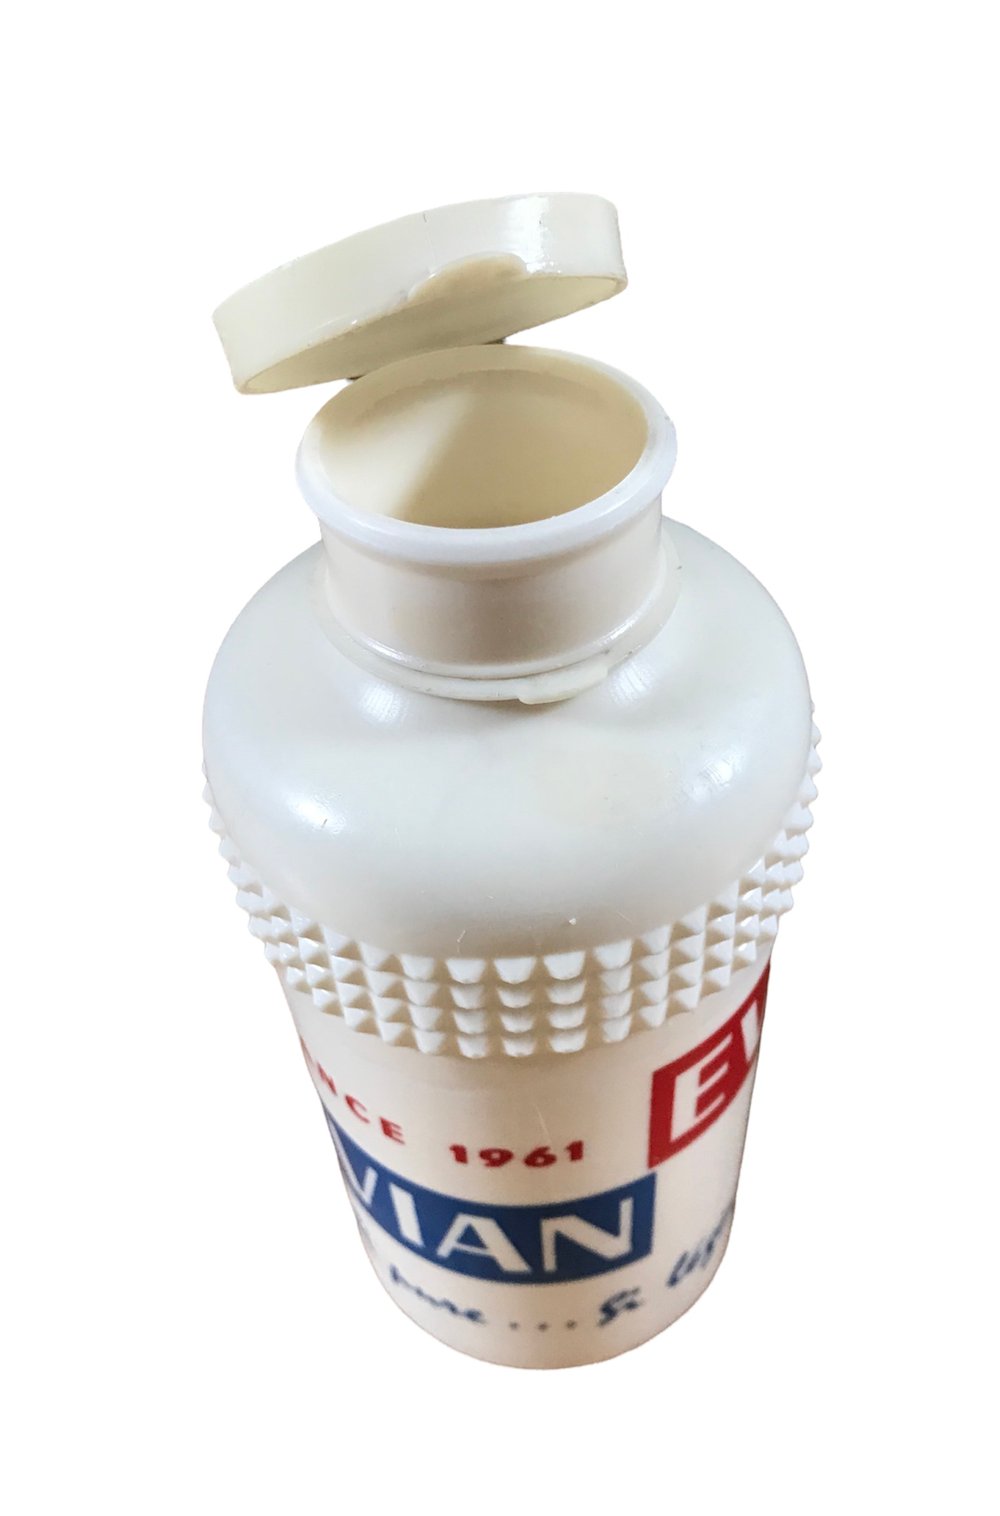 Vintage 1961 ðŸ‡«ðŸ‡· Tour de France / Evian Water Bottle